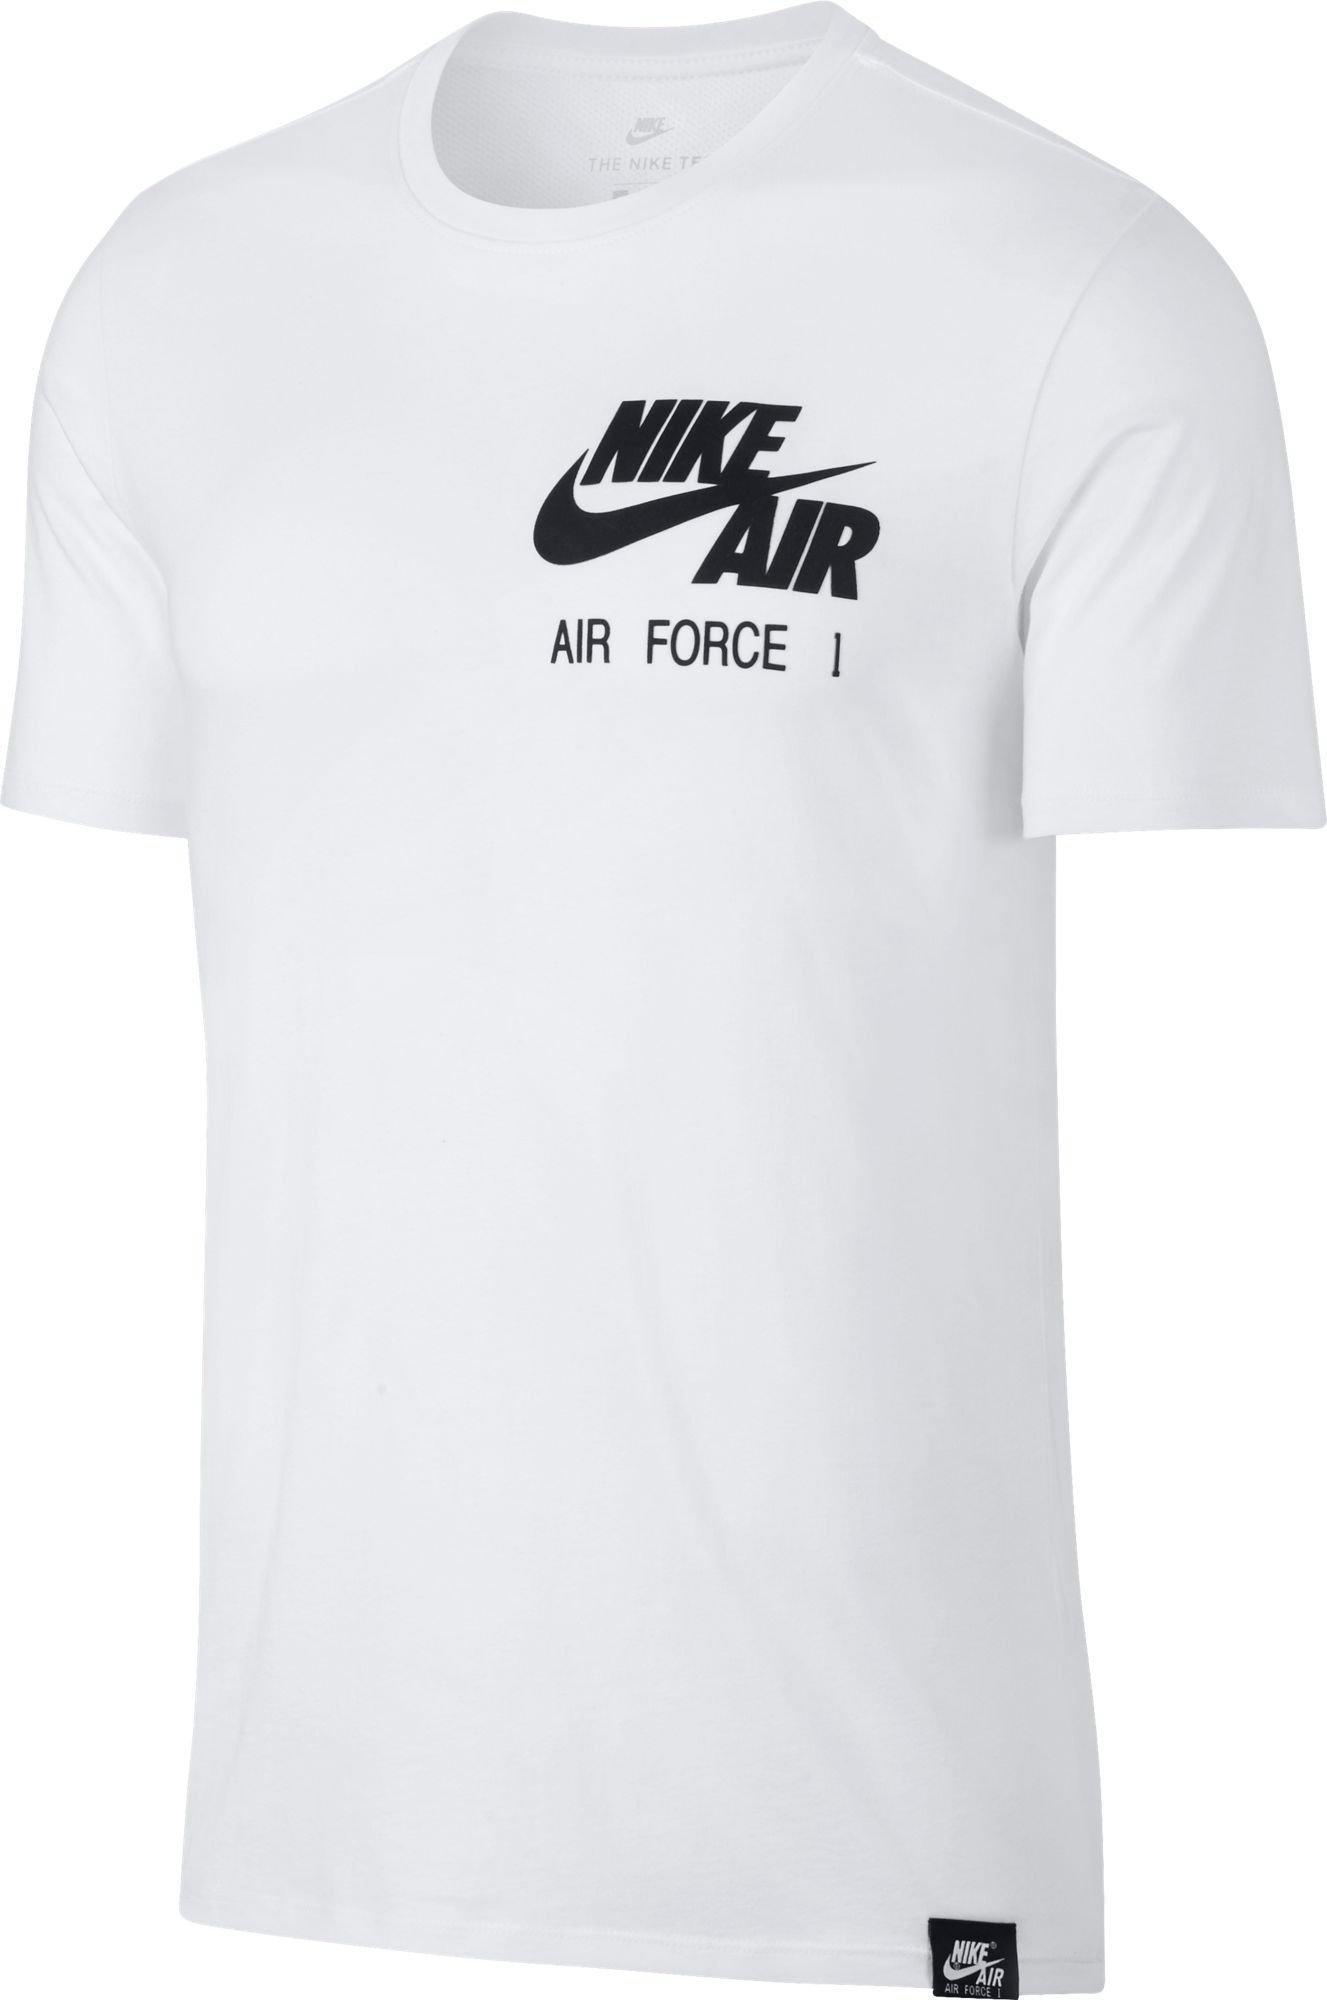 nike force shirt